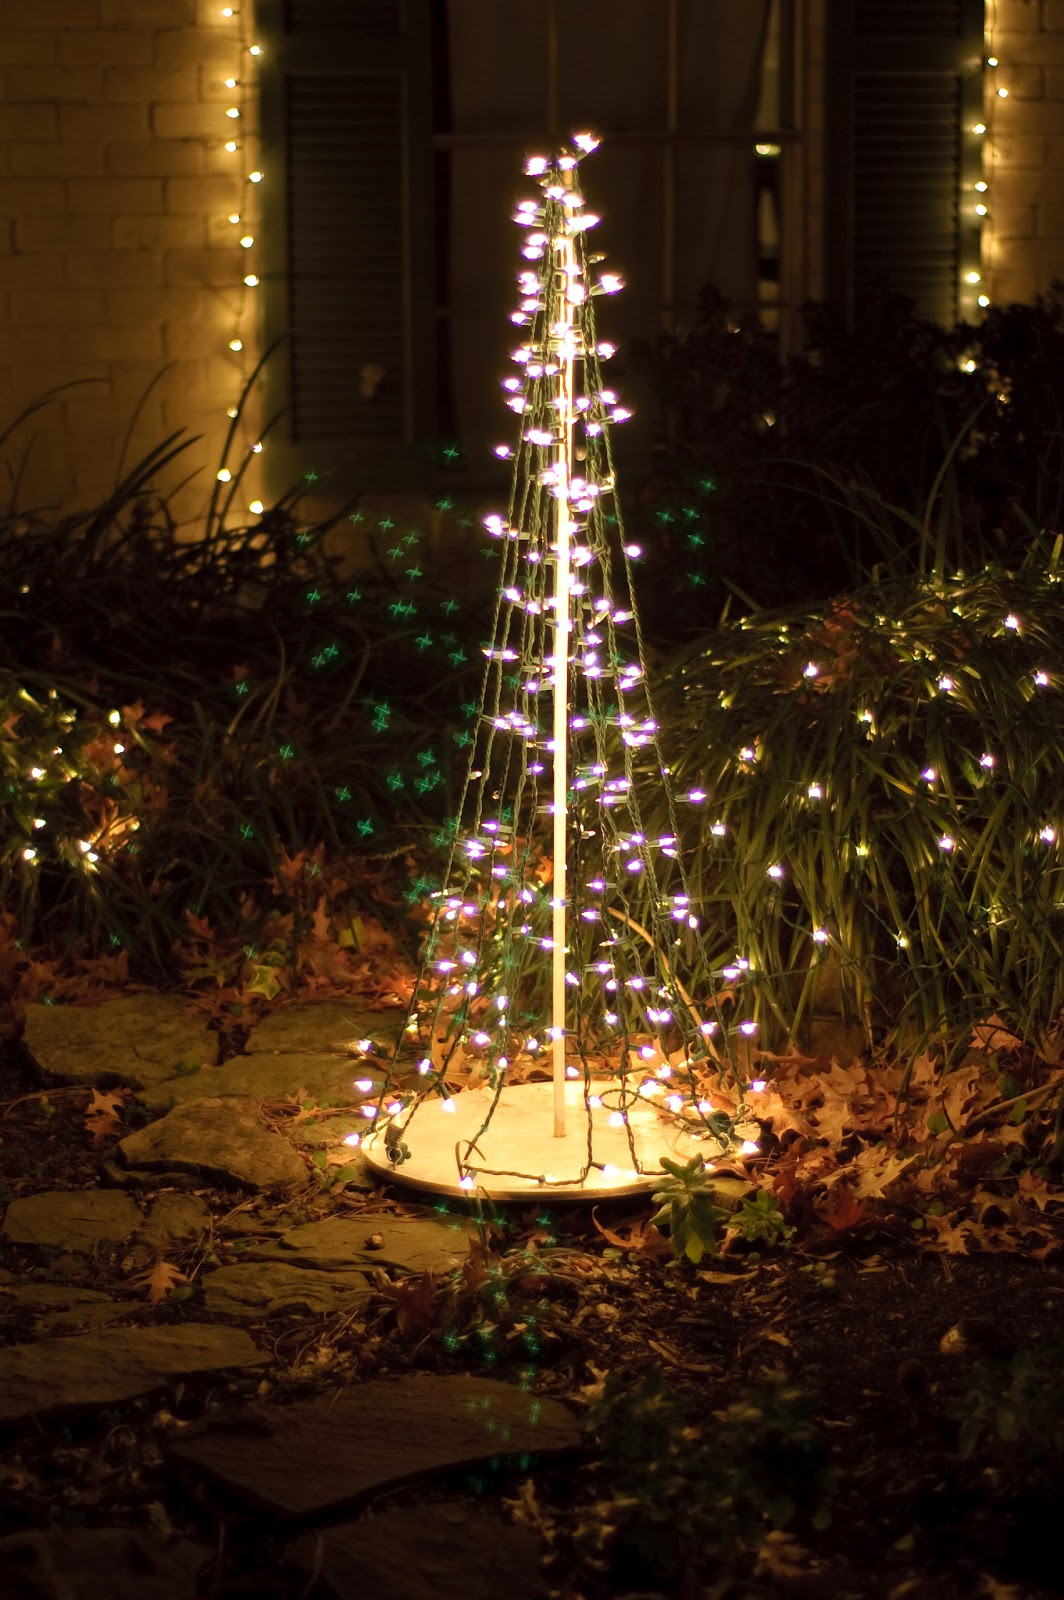 Patio Christmas Trees
 Lilybug Designs Outdoor Christmas Tree